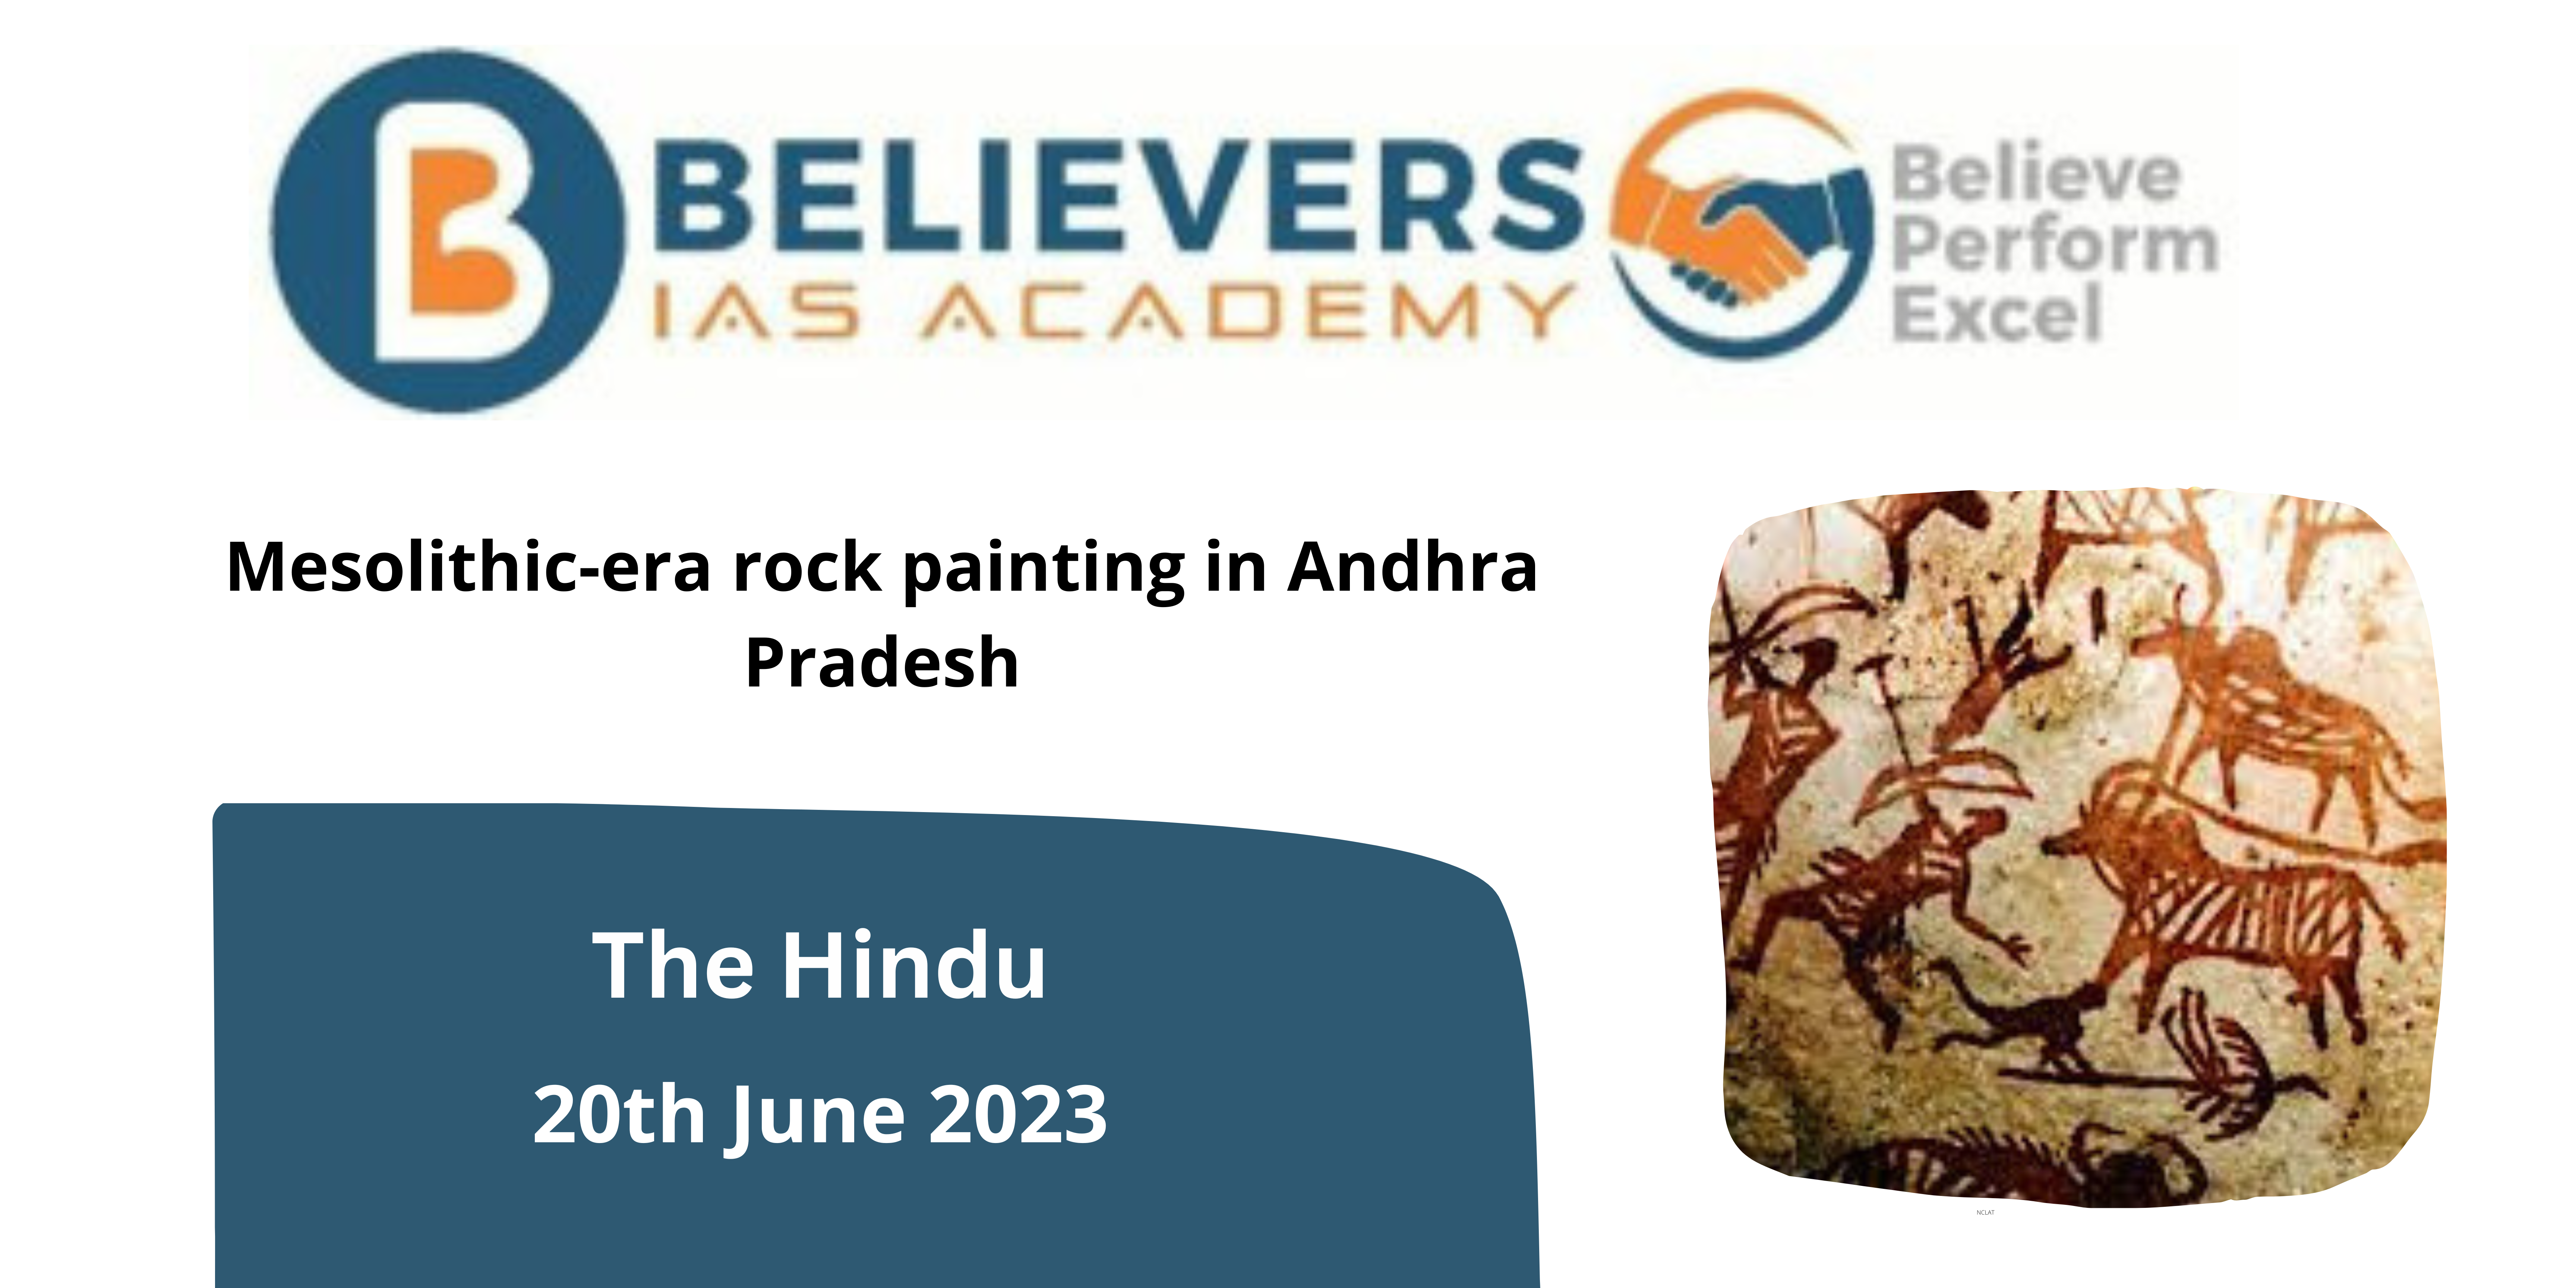 Mesolithic-era rock painting in Andhra Pradesh